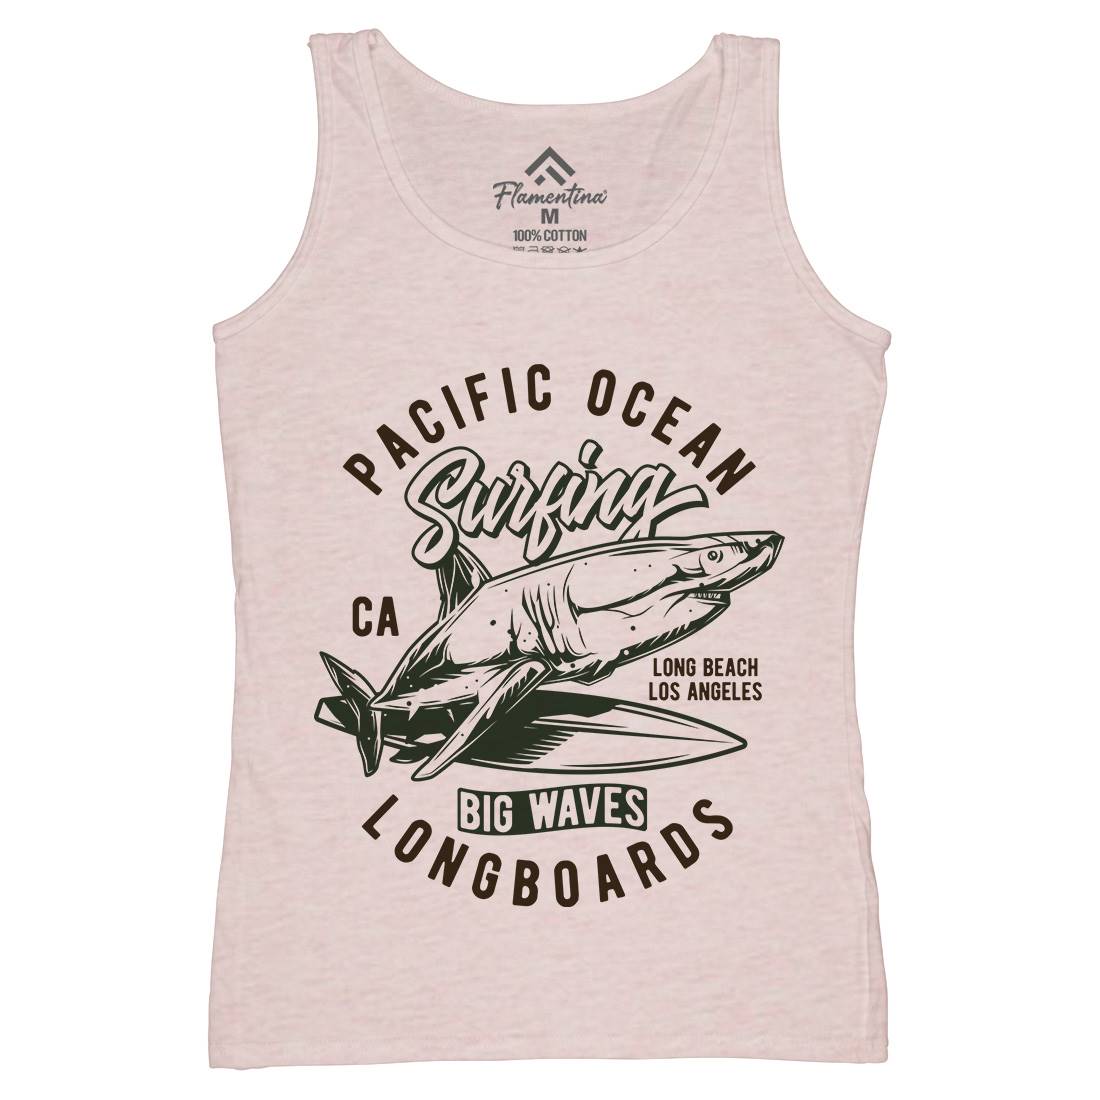 Pacific Ocean Surfing Womens Organic Tank Top Vest Surf B869